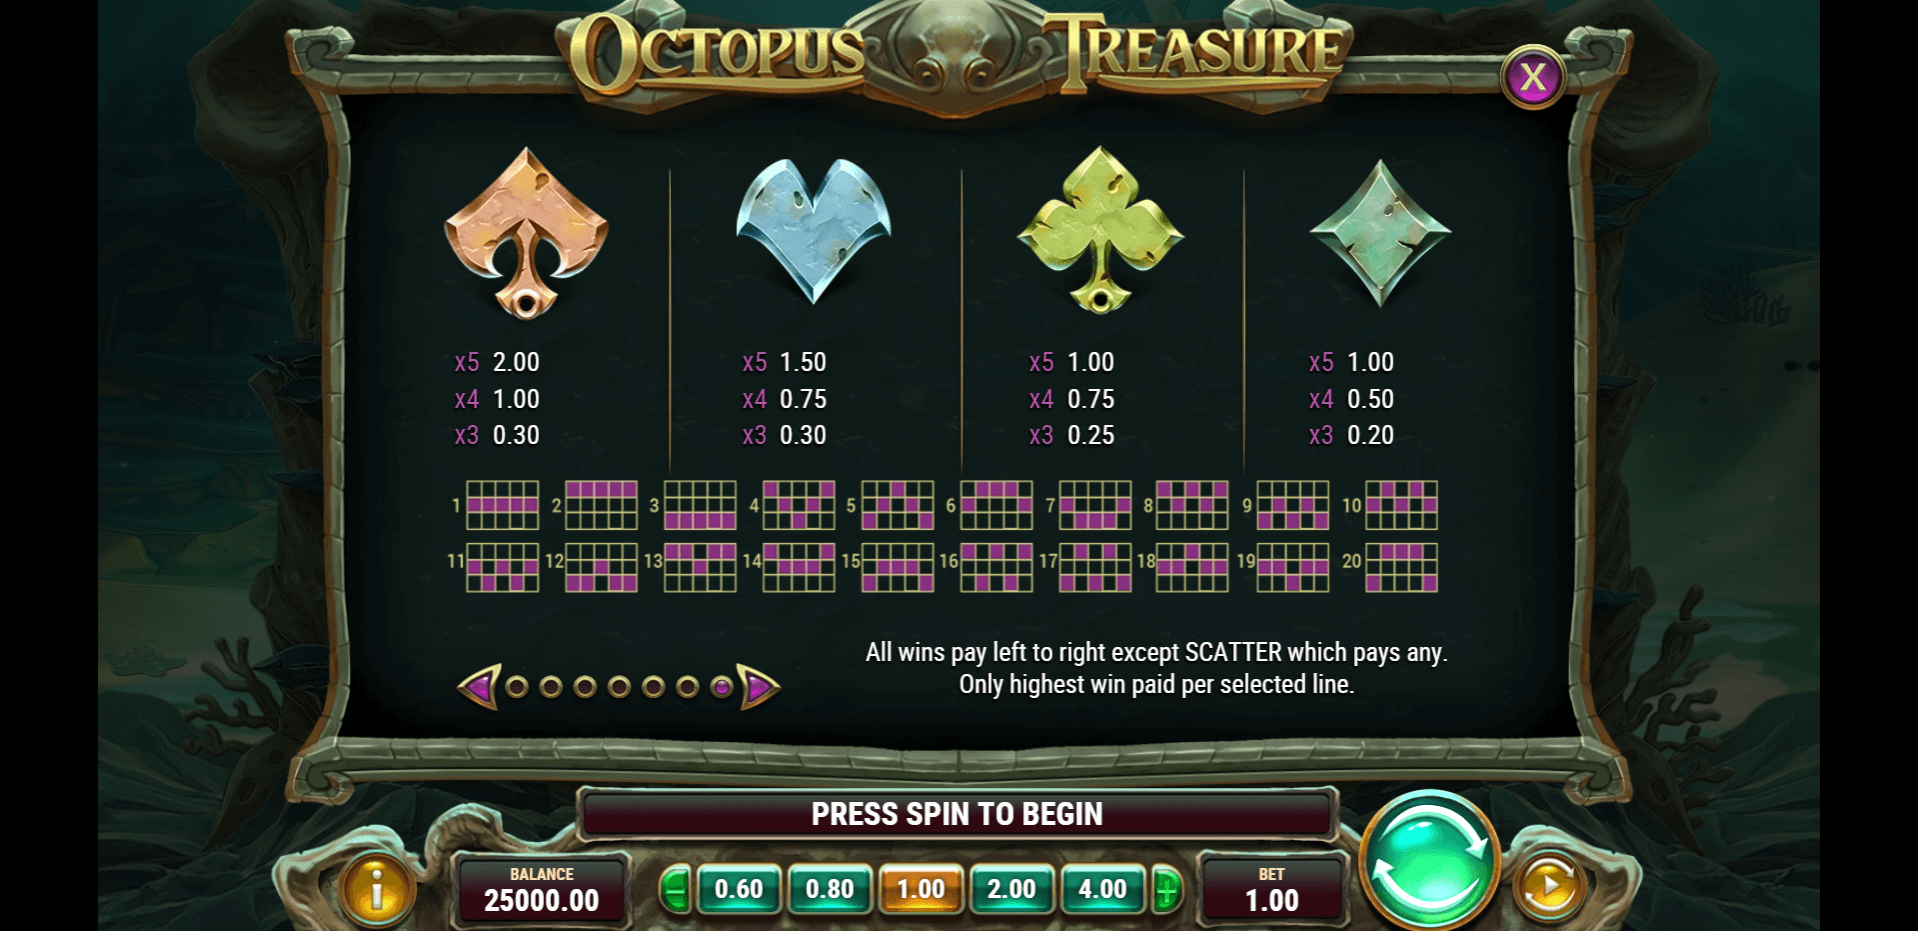 octopus treasure slot machine detail image 6